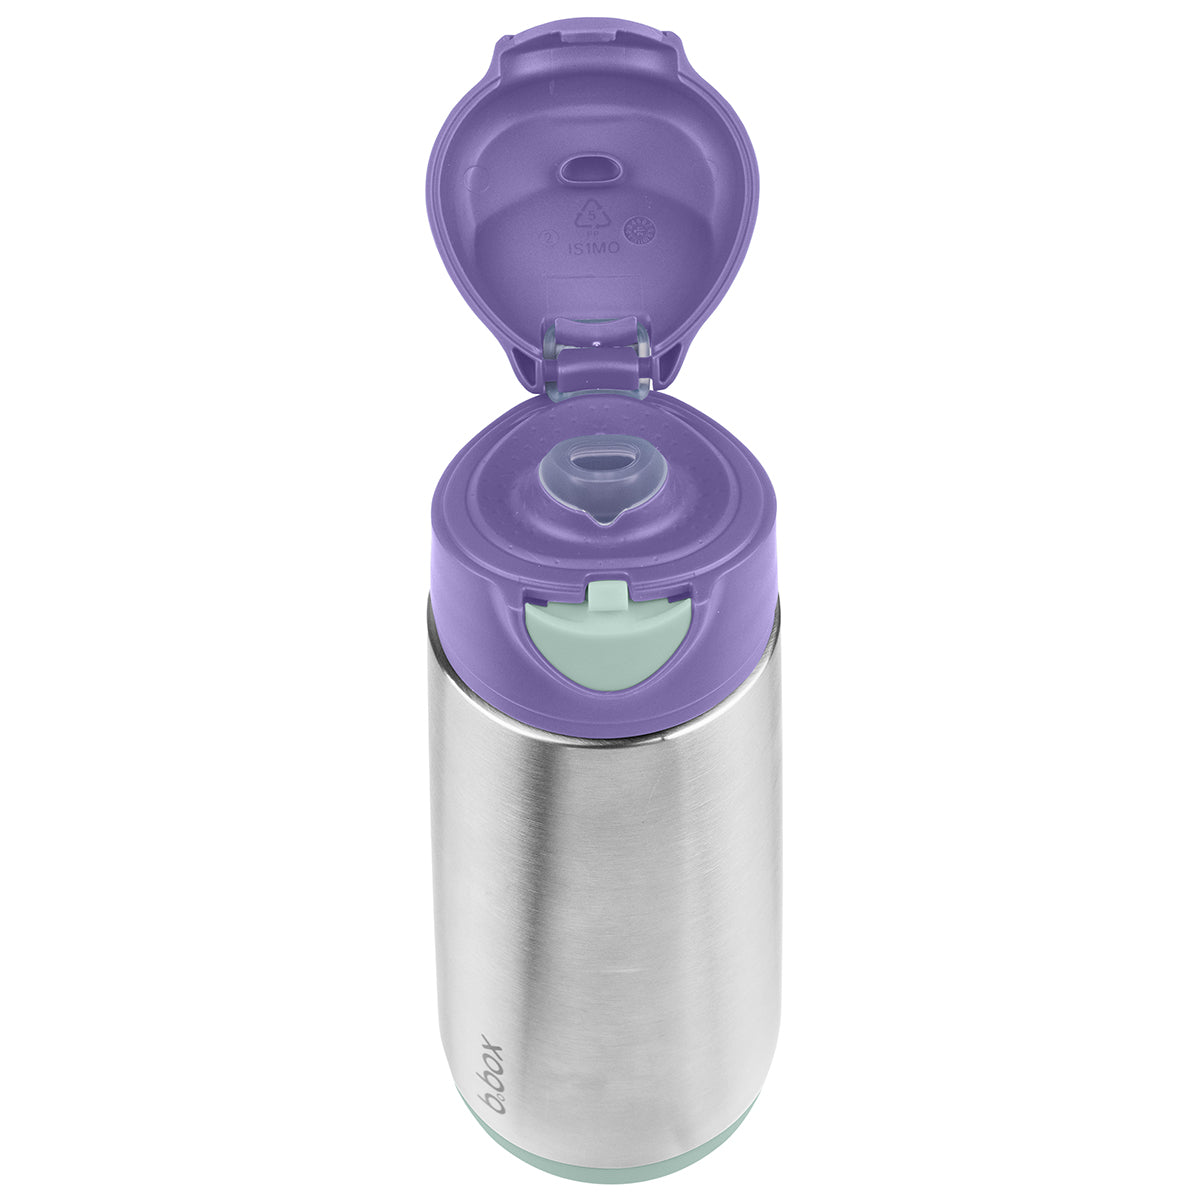 Botella térmica con boquilla B.Box 500ml - Lilac Pop